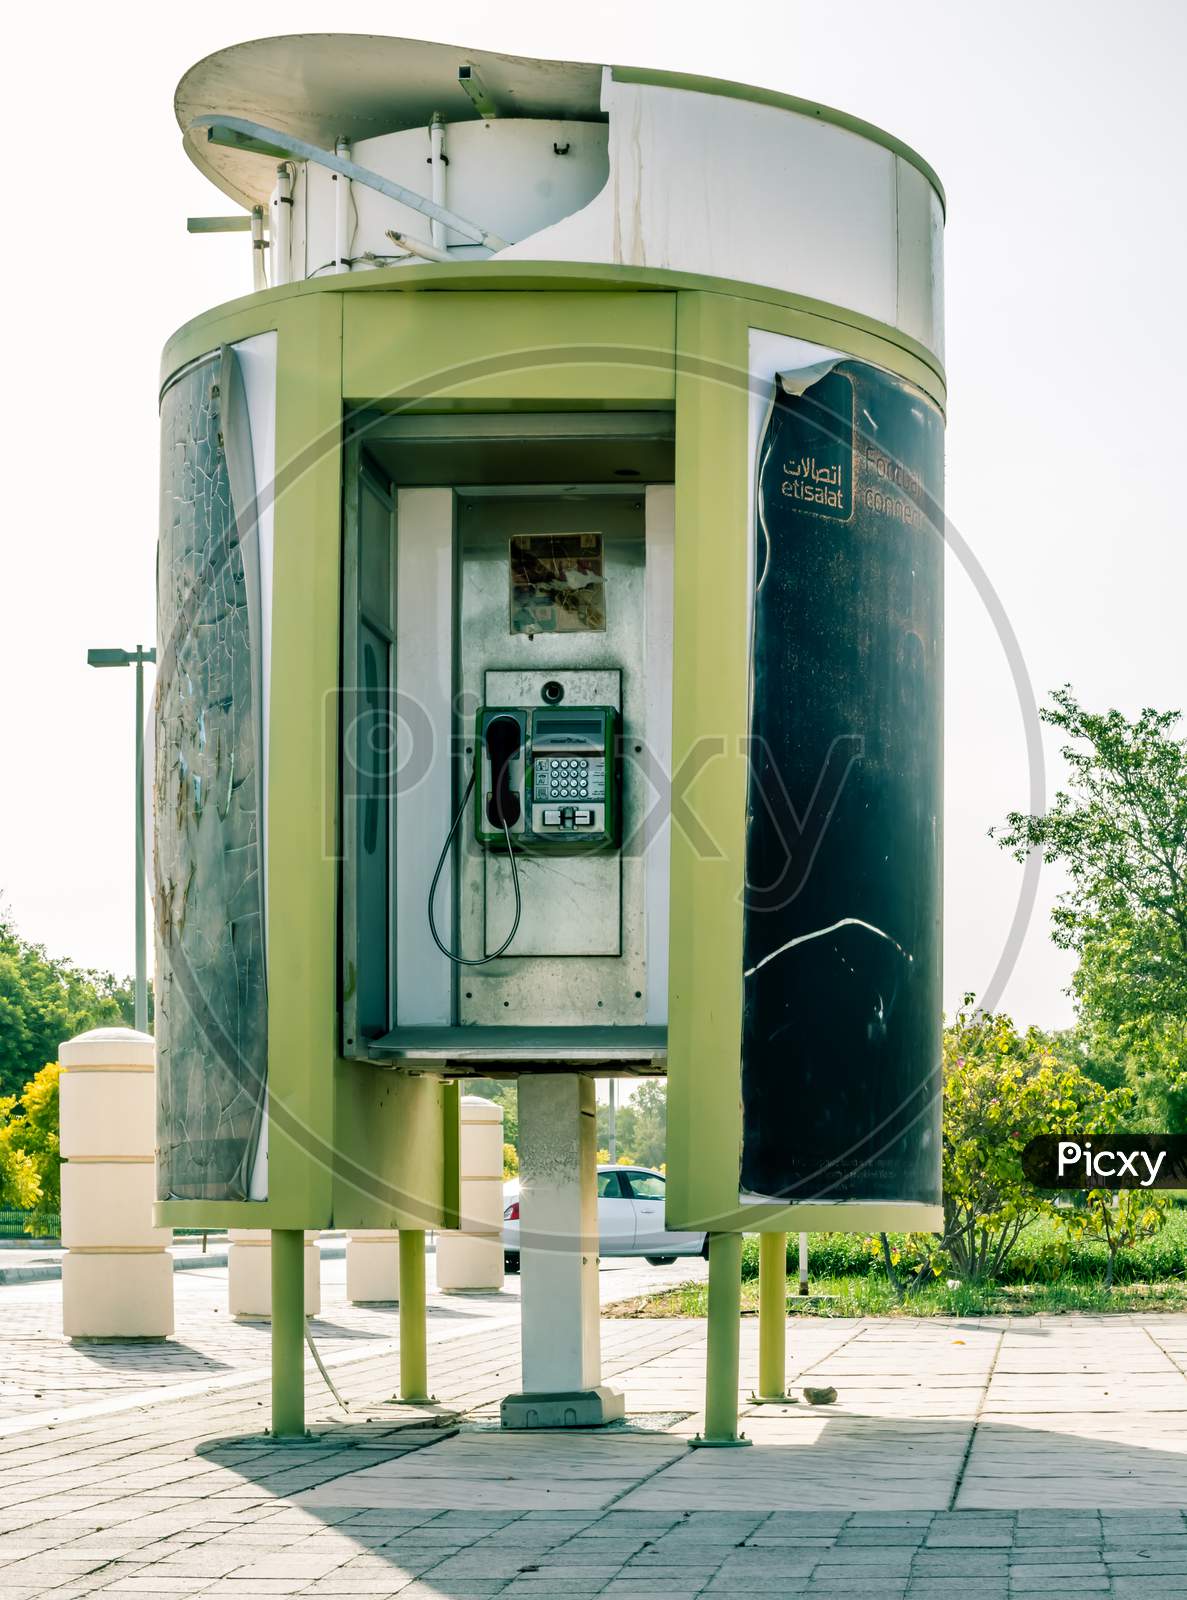 Etisalat Phone Booth In Abu Dhabi - United Arab Emirates.